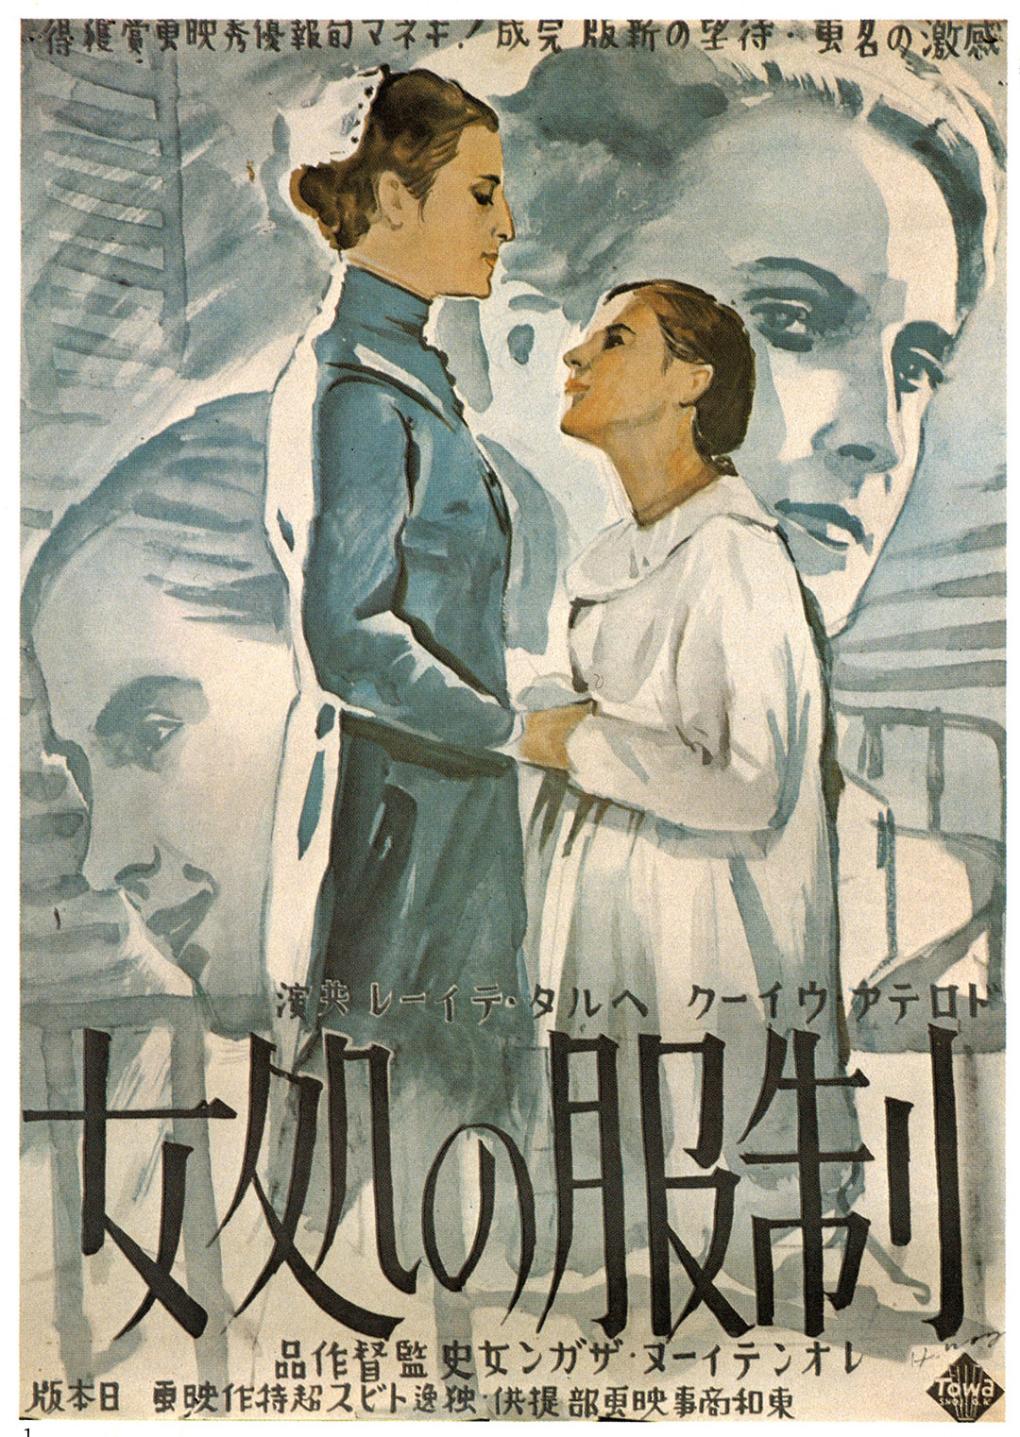 The 1933 Towa Shoji release poster for 制服の処女, the Japanese version of 'Mädchen in Uniform'  (Kawakita Memorial Film Institute).